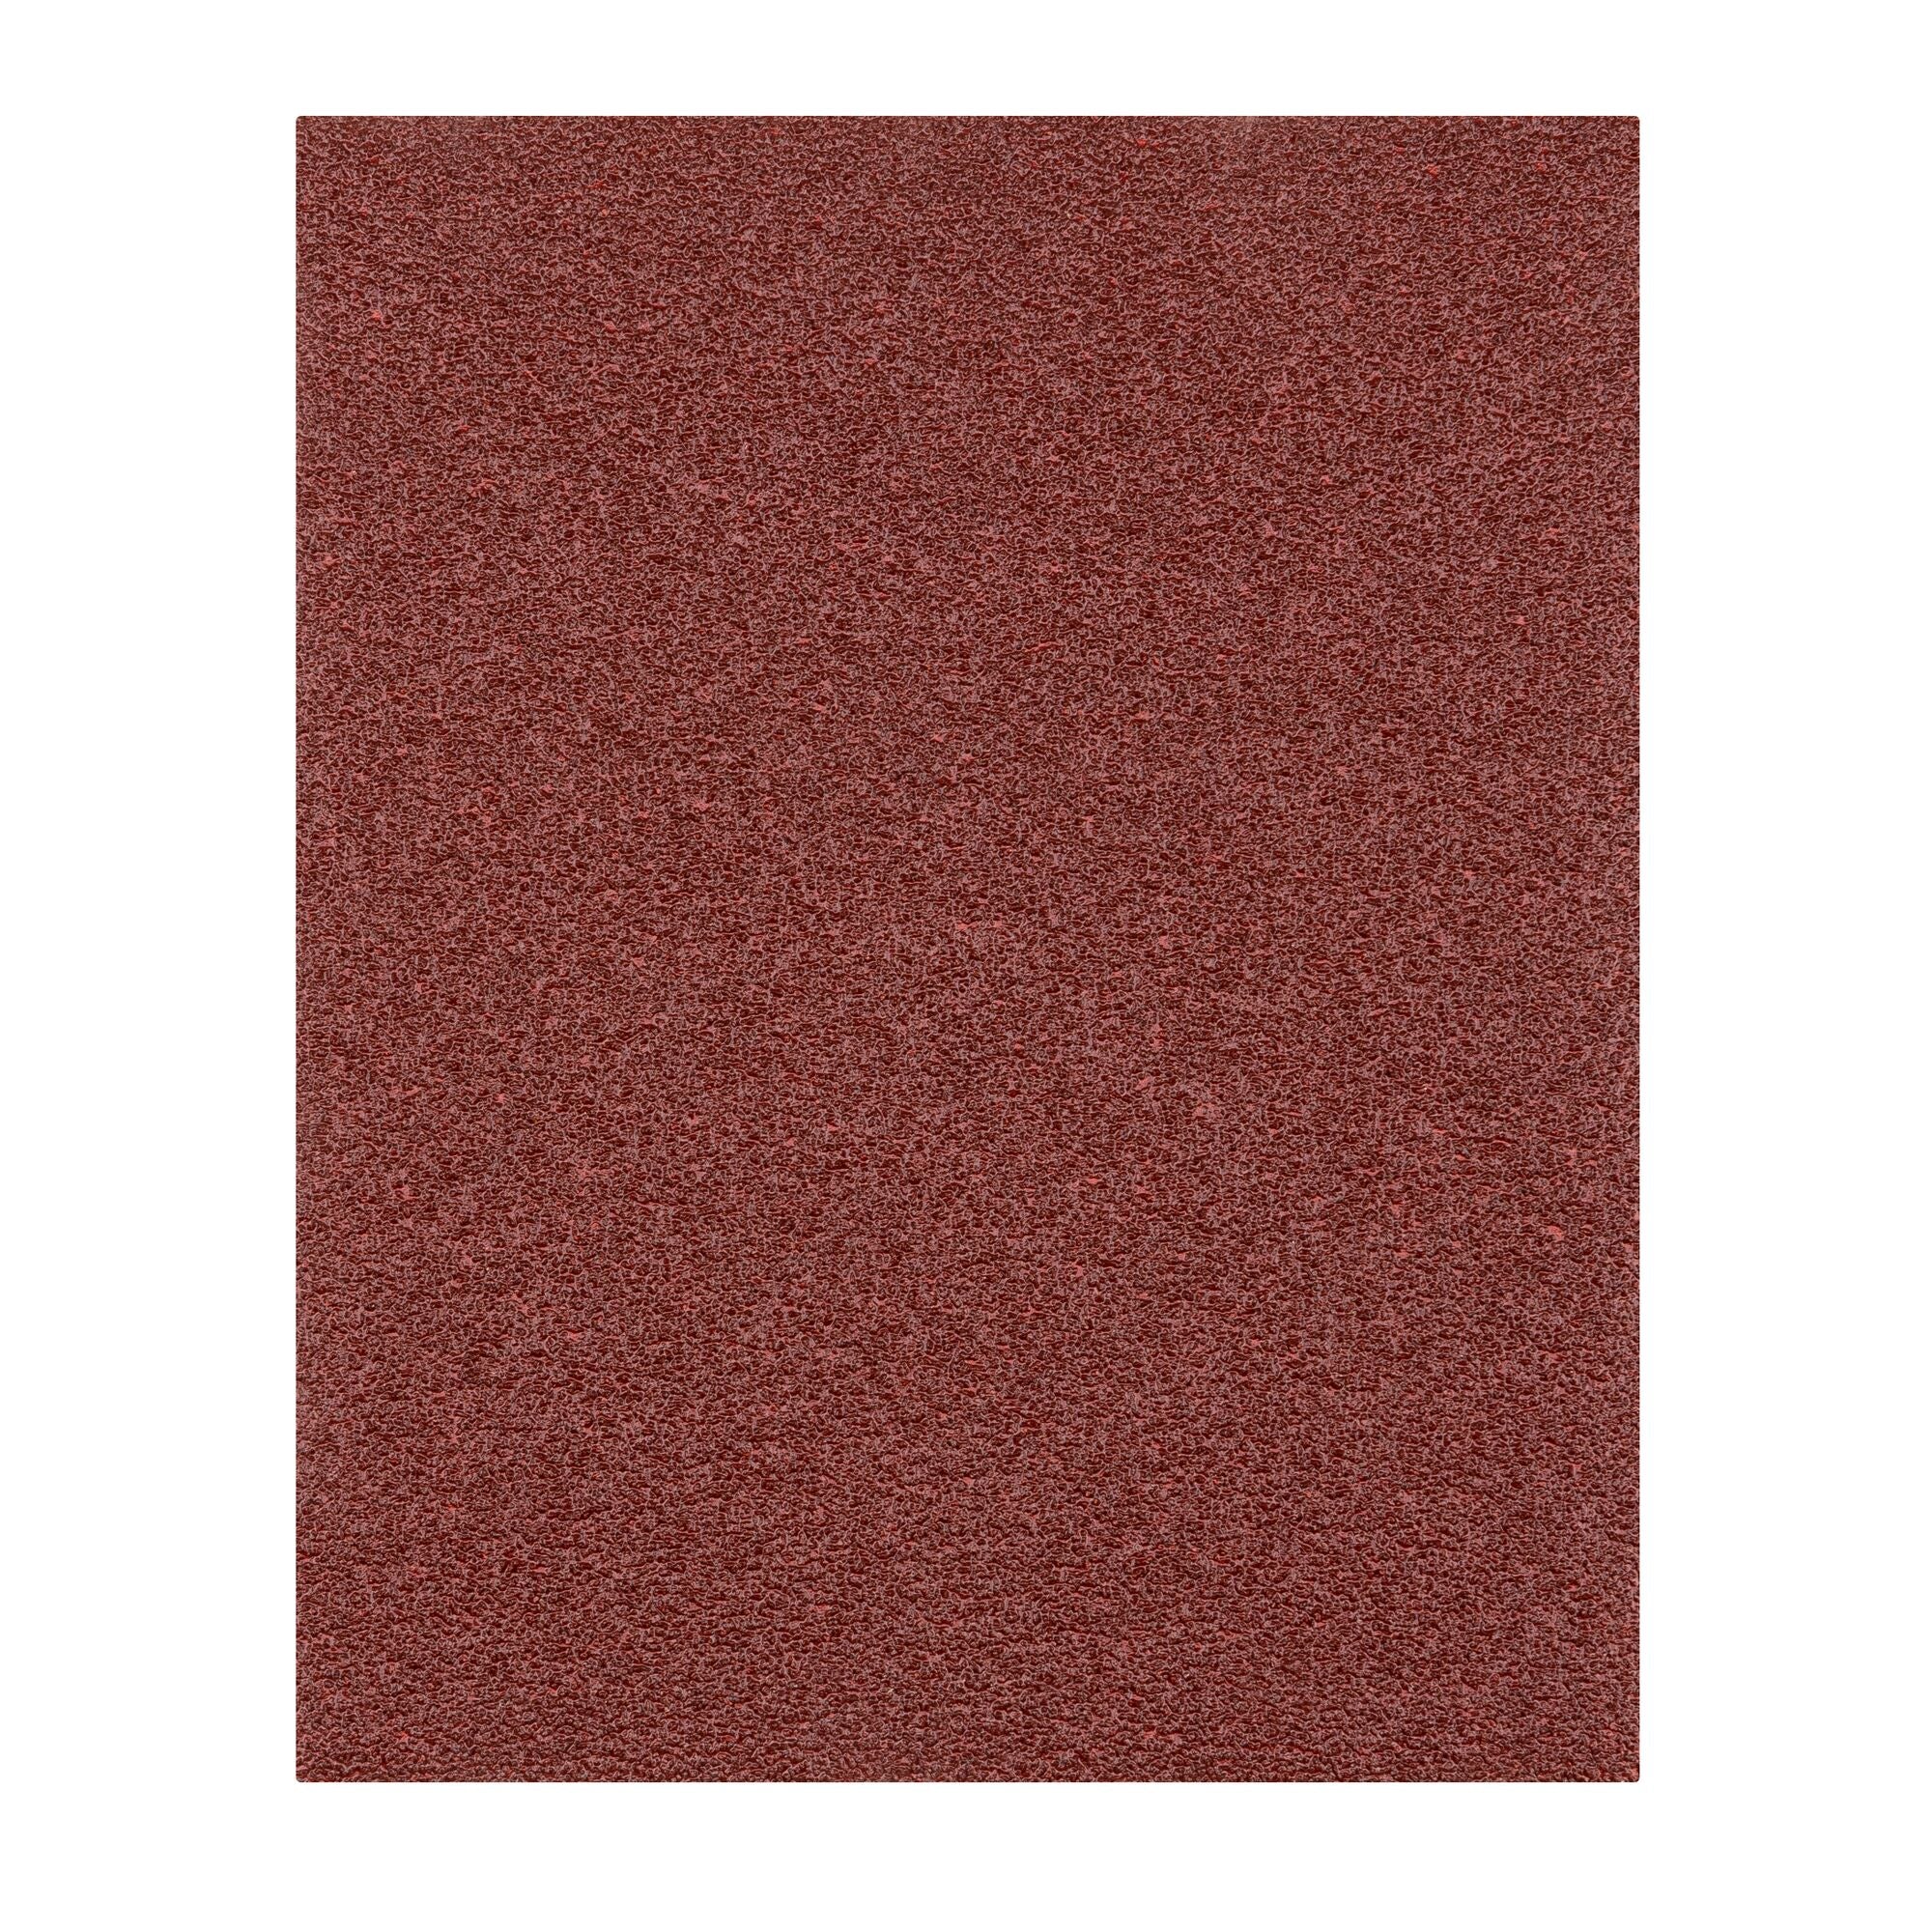 Sandpaper Assortment, 1/4-Inch Sheet, 6-Pack